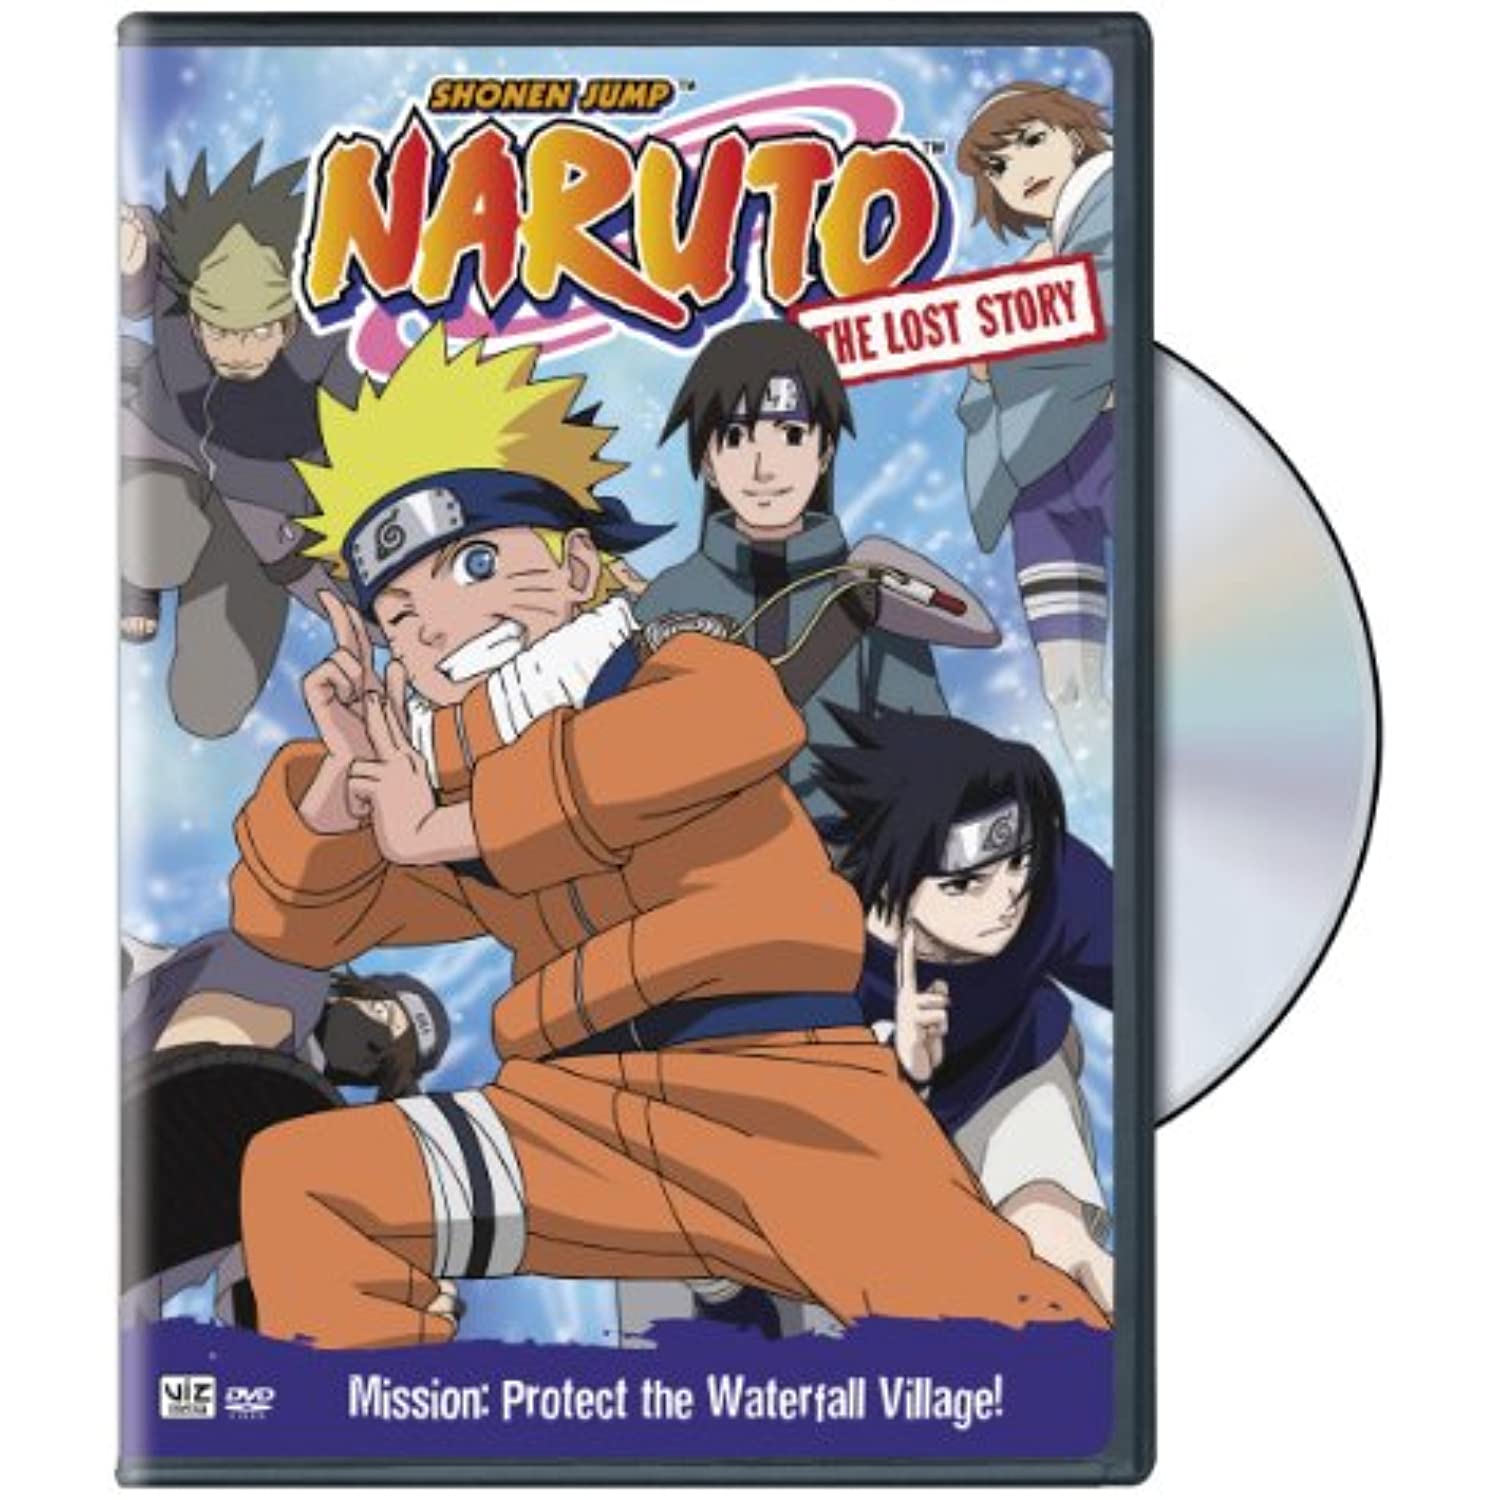 Naruto - Ova [DVD] - image 1 of 1